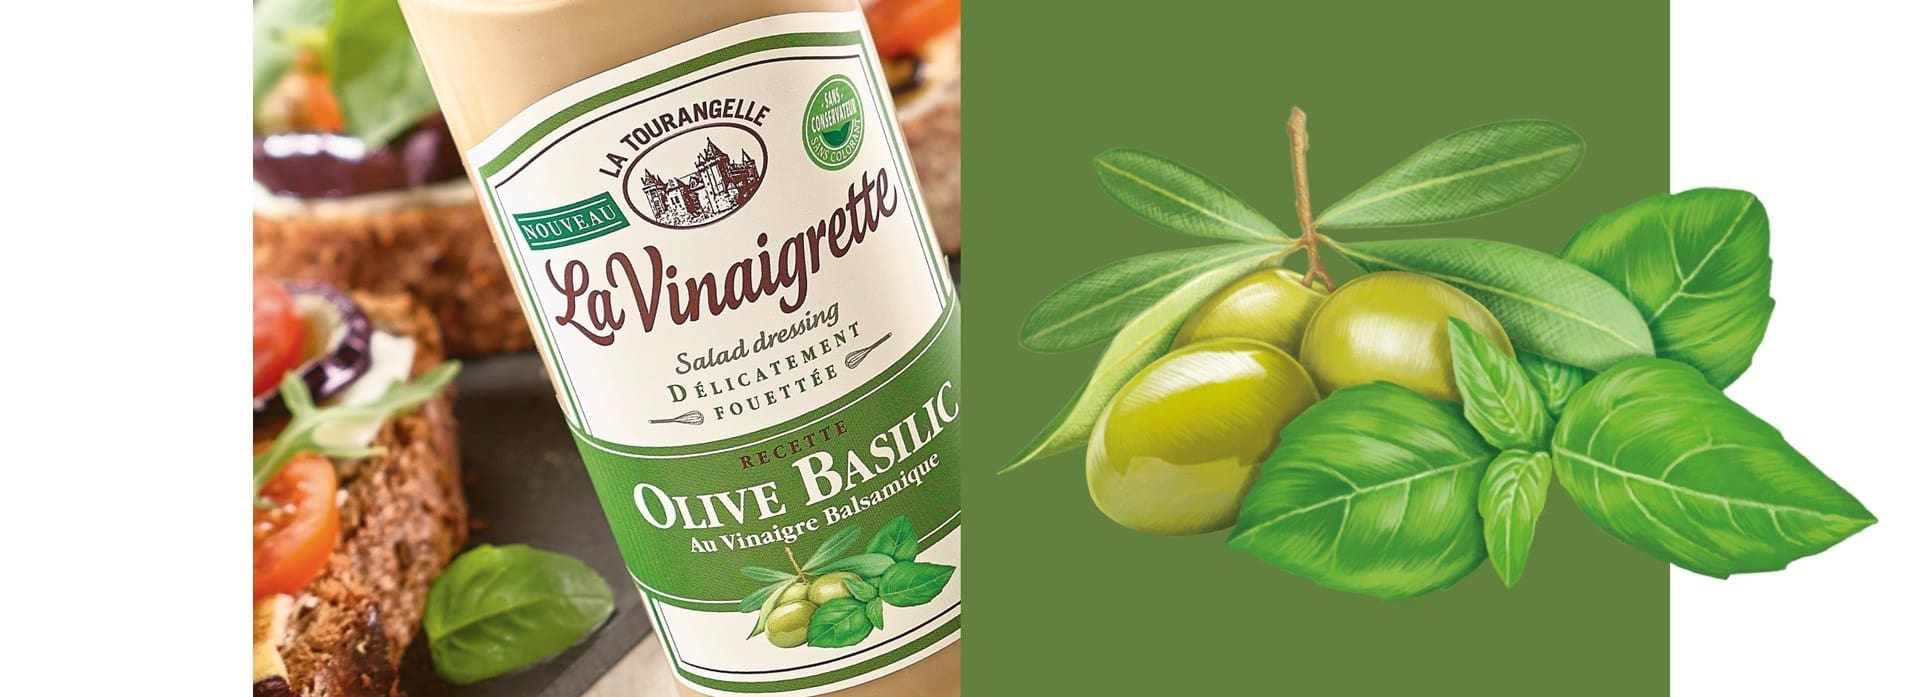 olive basilic Vinaigrette packaging la tourangelle VIKIU